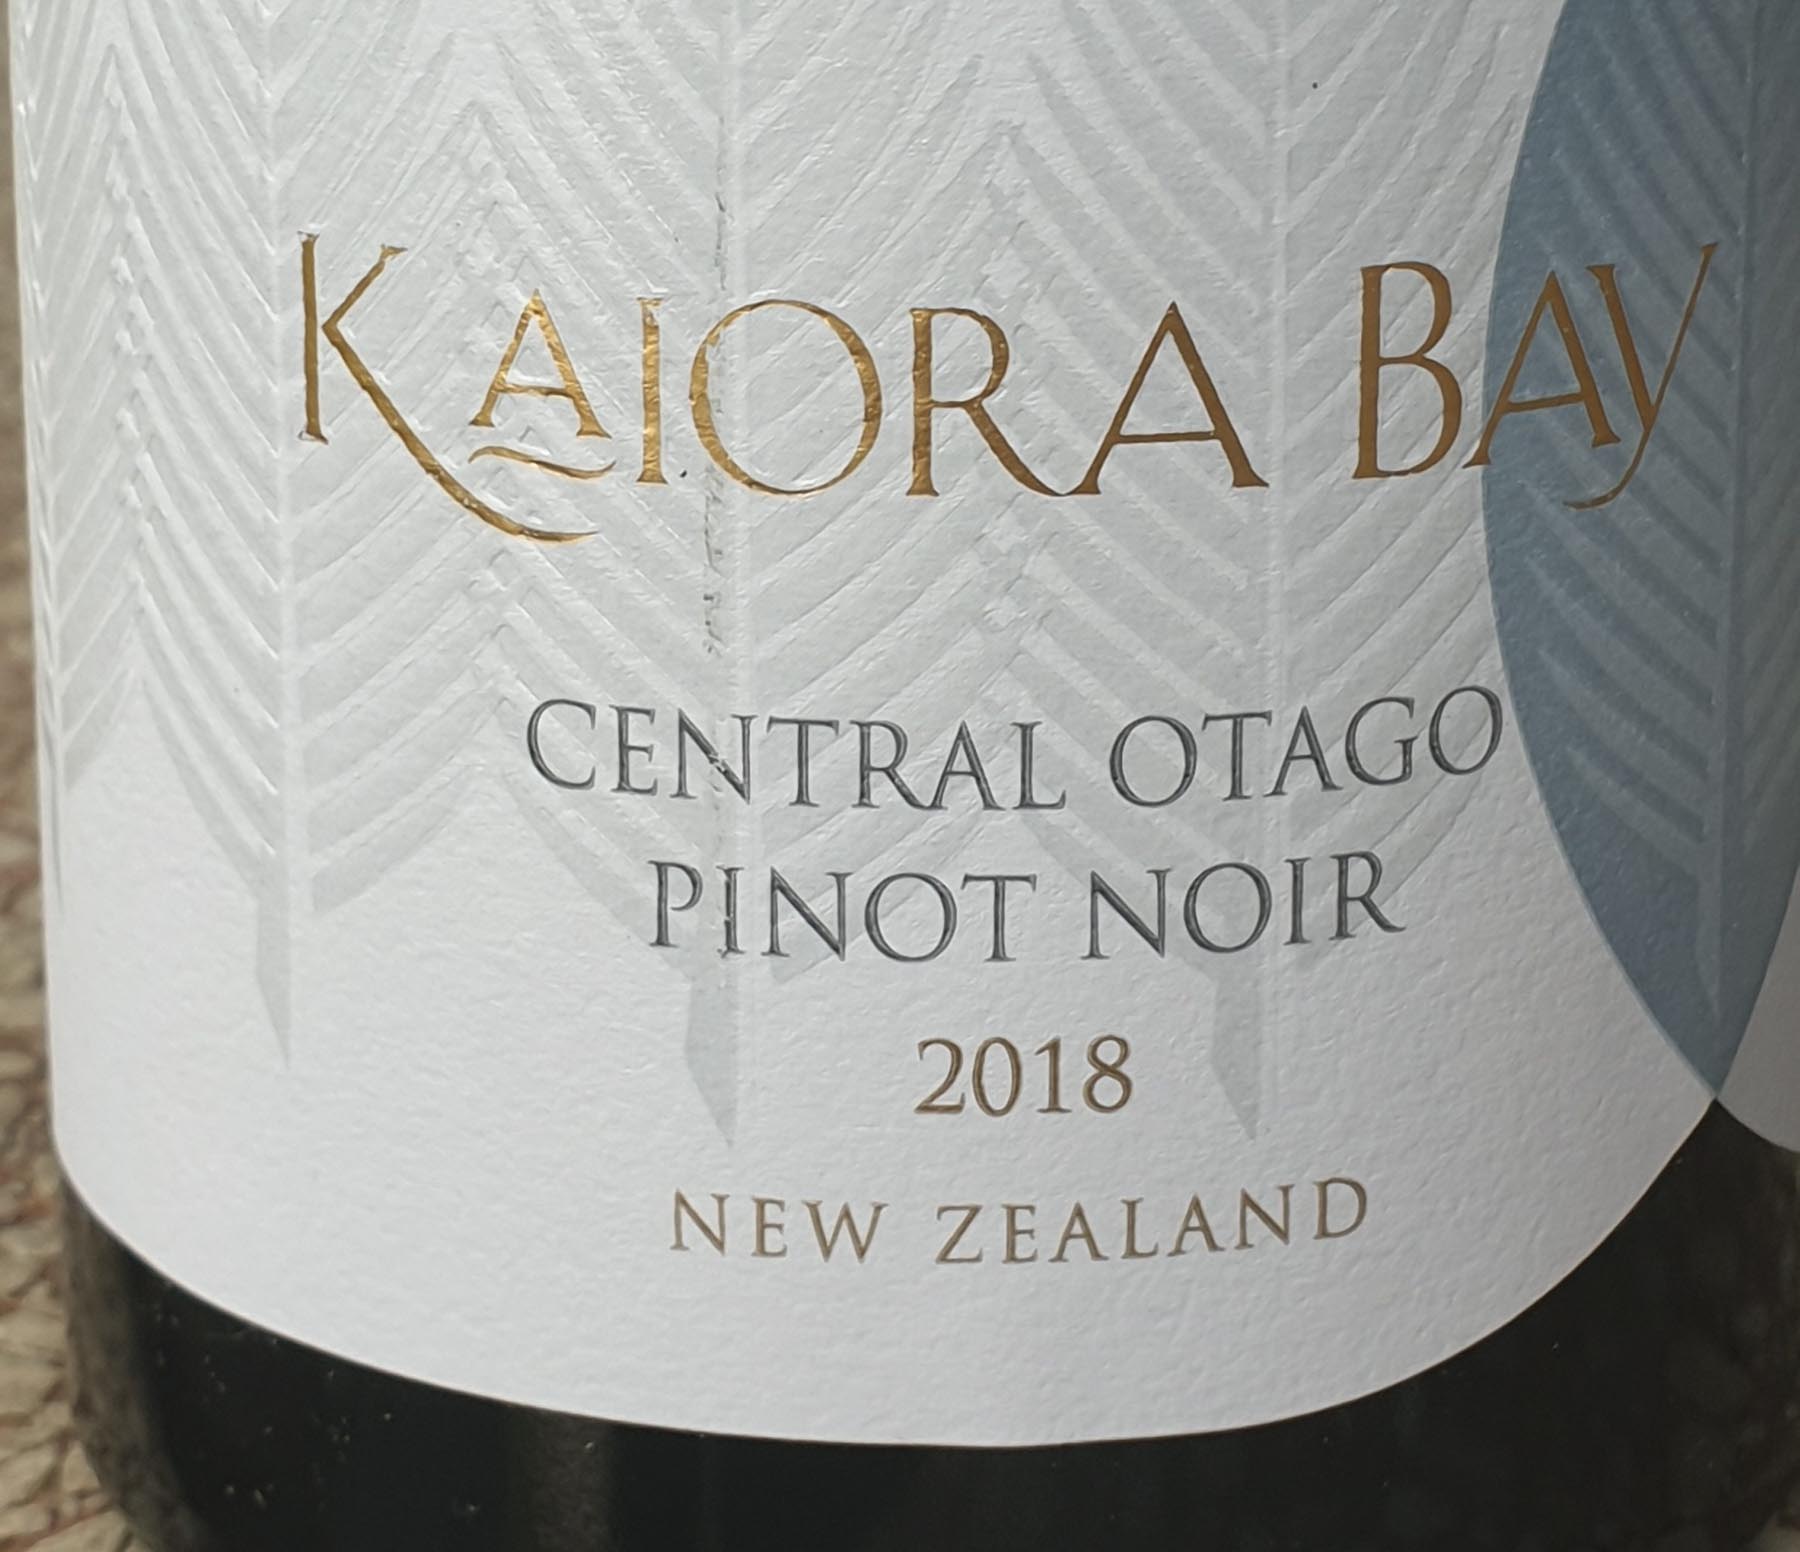 Kaiora Bay Reserve Central Noir Otago Pinot – 2018